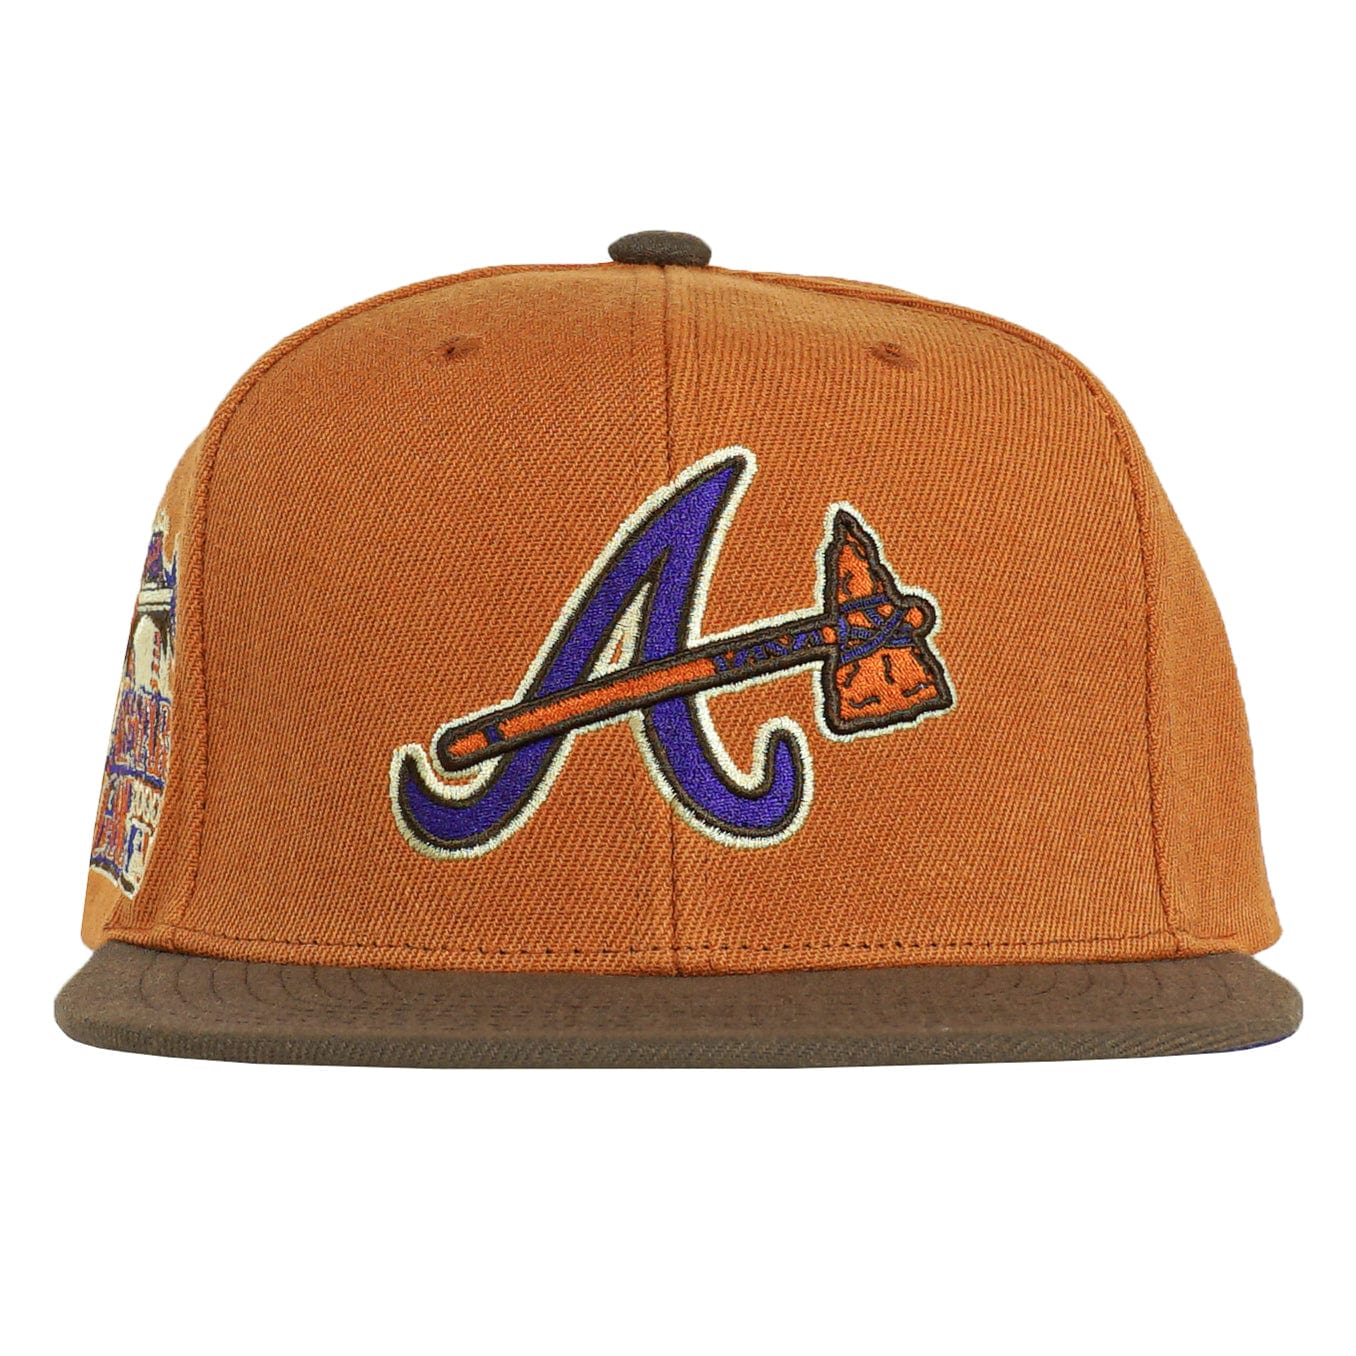 Atlanta Braves Sweet Potato Pie Cooperstown Snapback Hat in yam